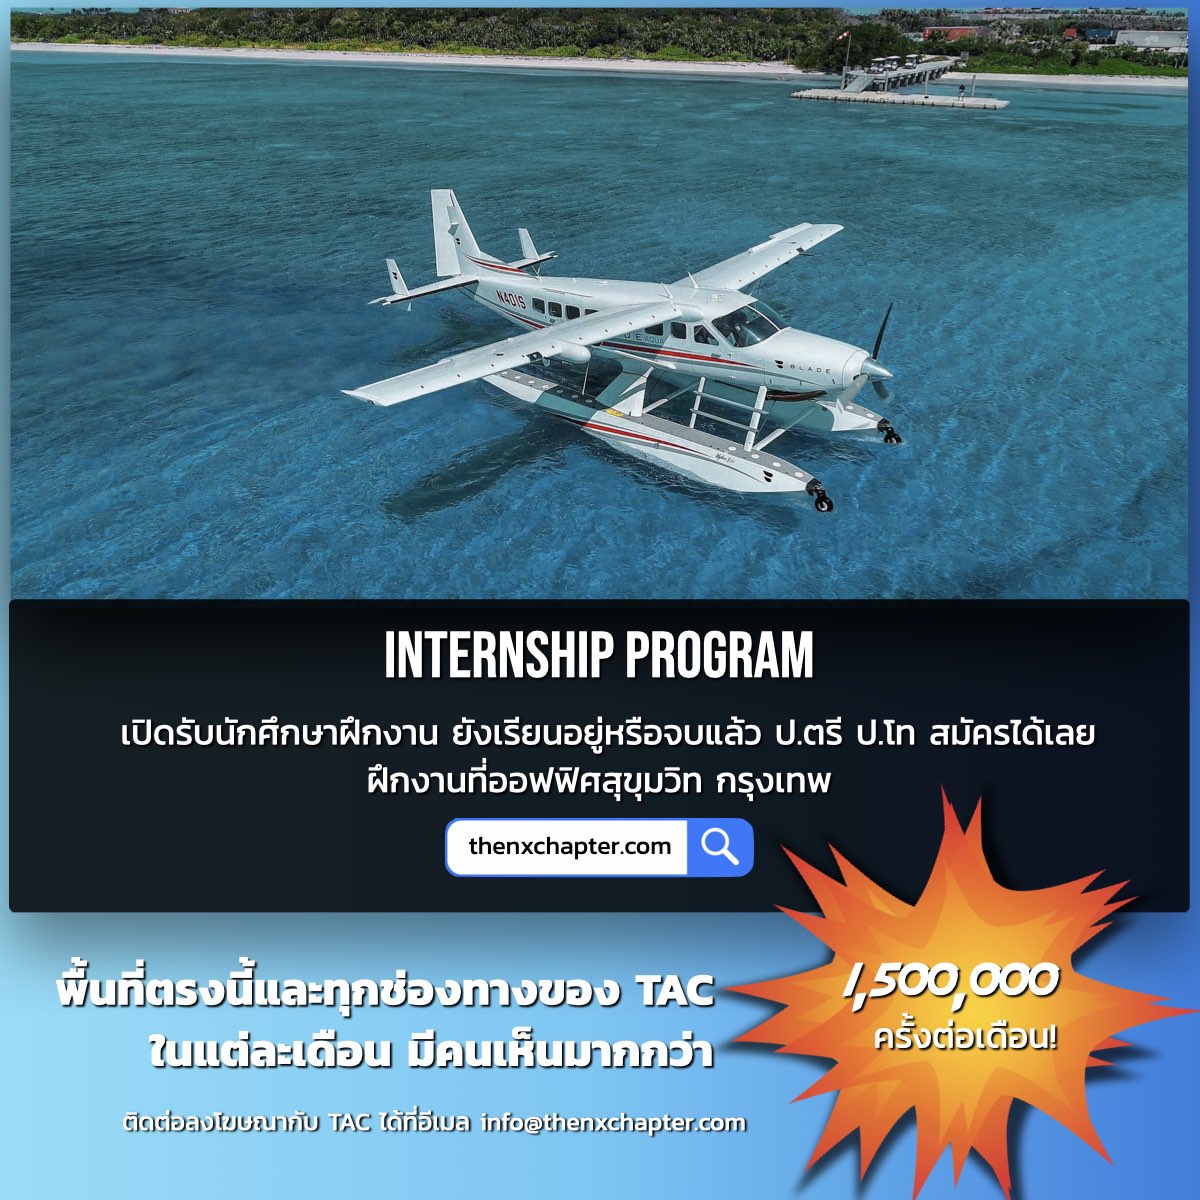 Siam Seaplane เปิดรับนักศึกษาฝึกงาน แผนก Partnerships & Business Development, Operations, Finance, Marketing ทำงานที่ Siam Seaplane ซ.นานาเหนือ คลองเตย กรุงเทพฯ ดูรายละเอียดและสมัครได้ที่ thenxchapter.com/siam-seaplane-…

#siamseaplane #internship #ฝึกงาน